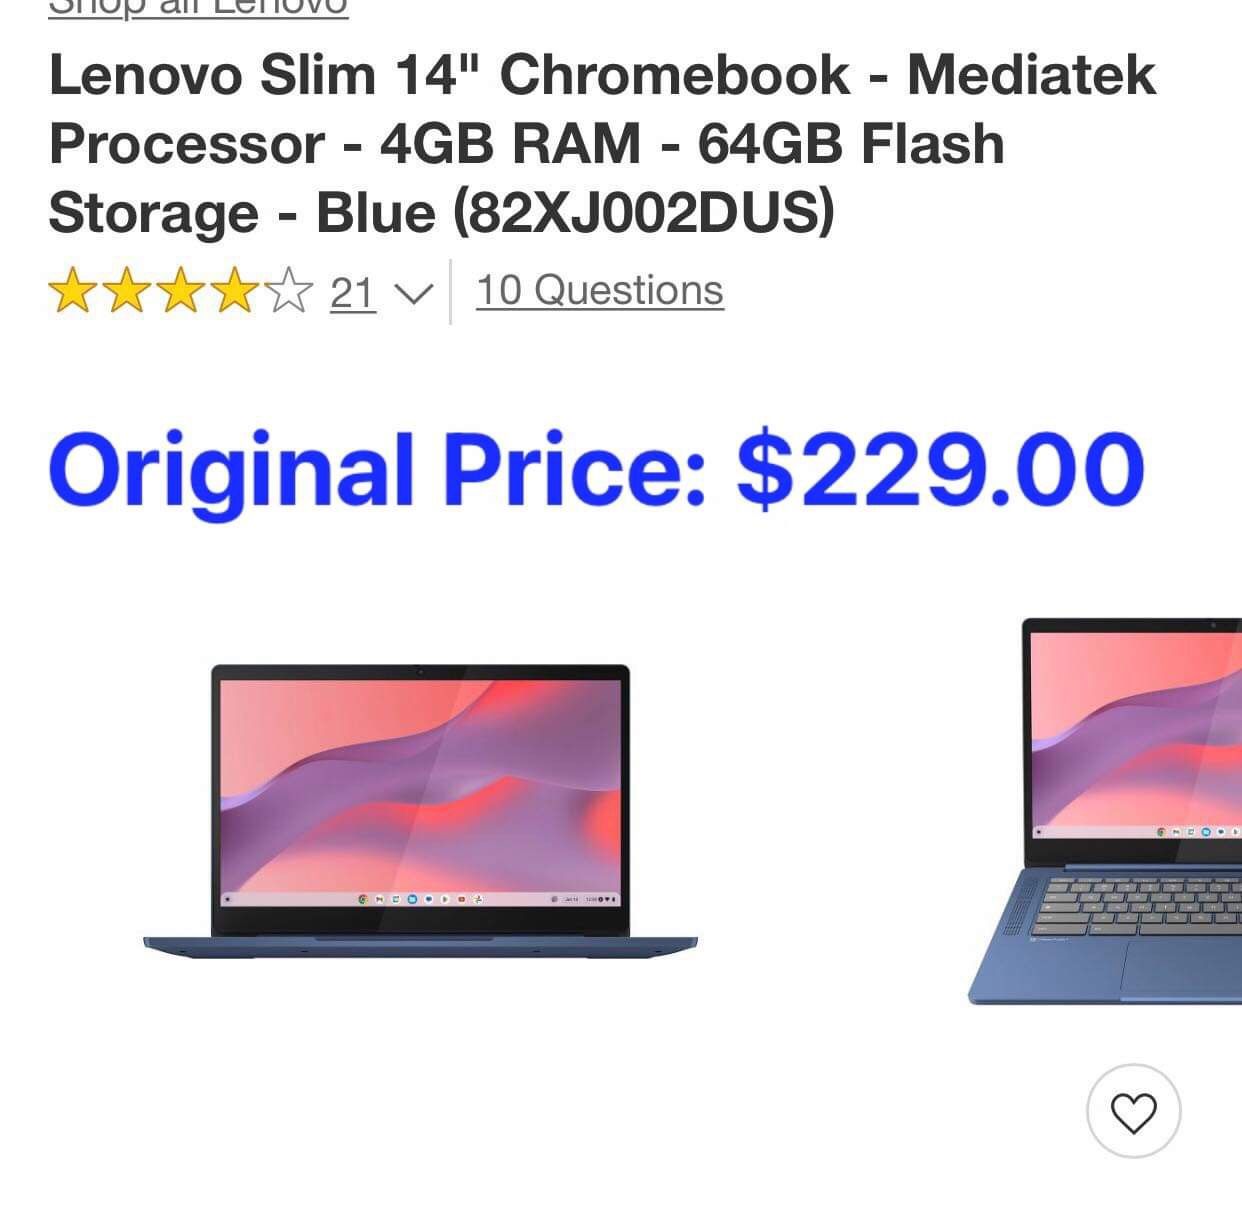 Lenovo Slim 14” Chromebook